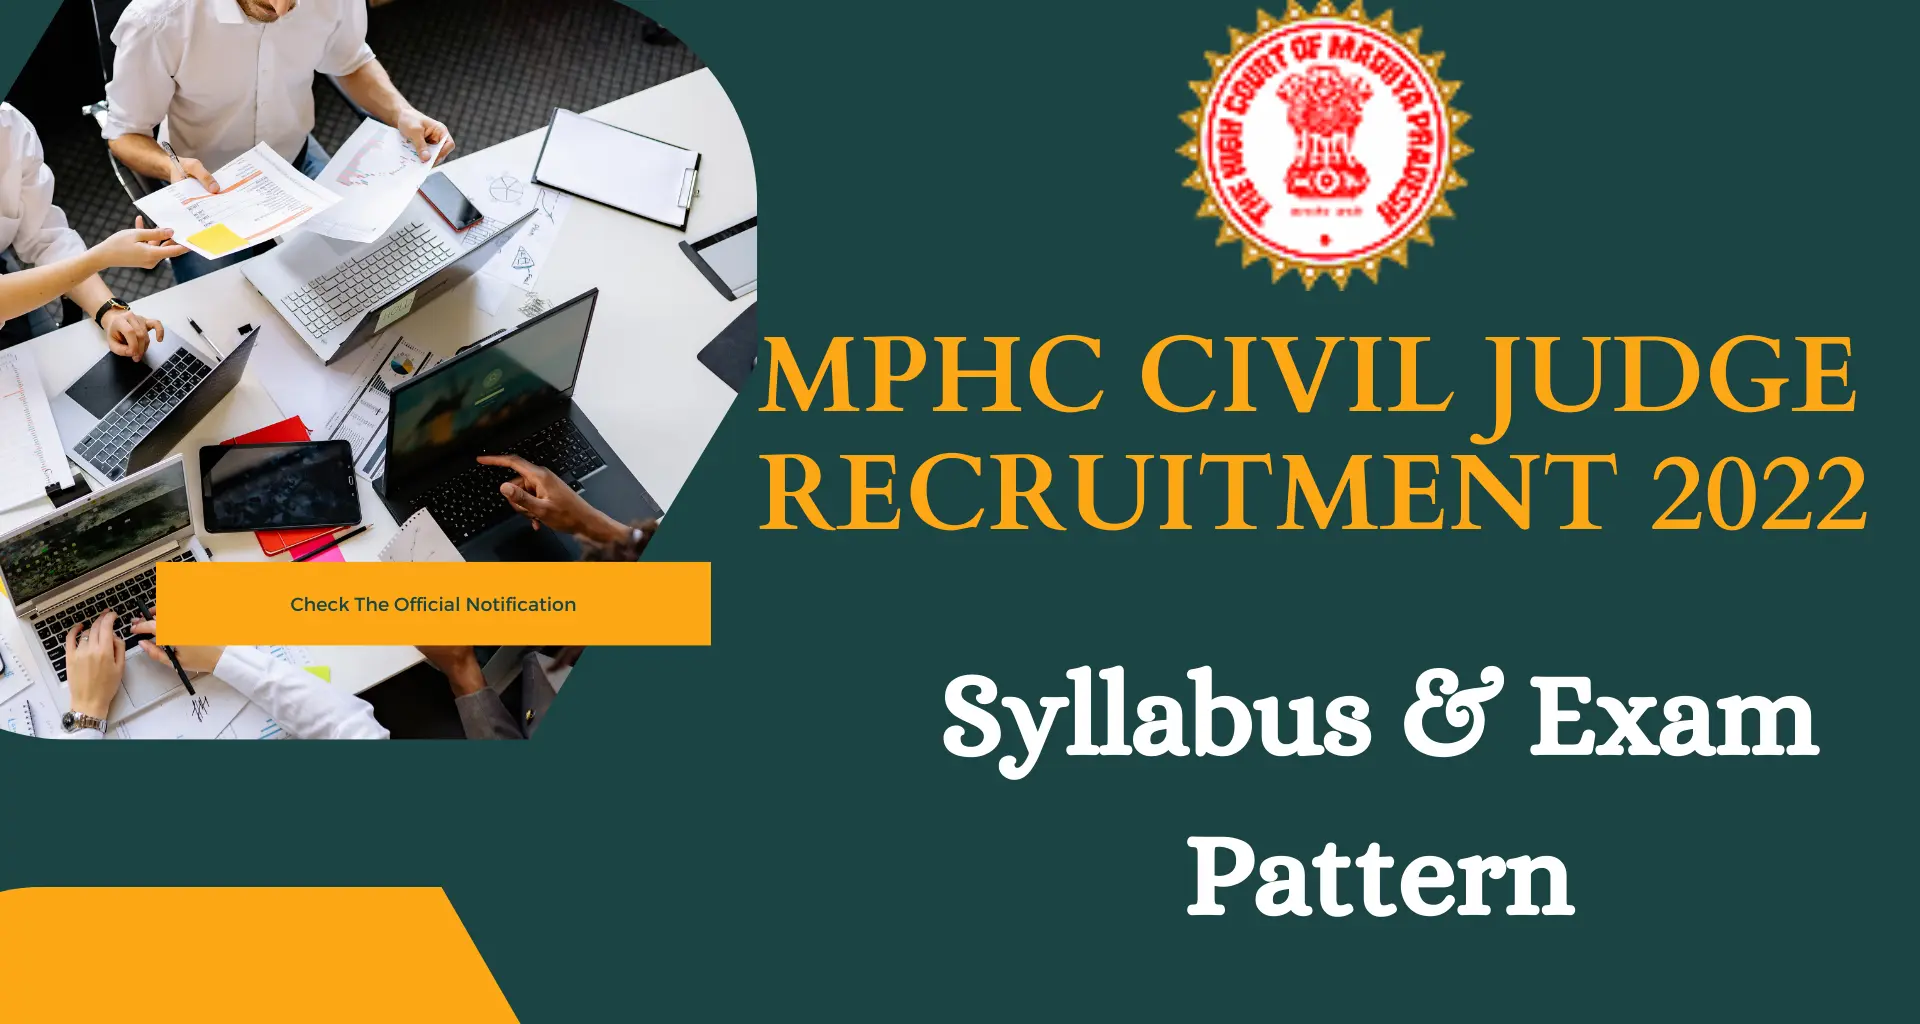 MPHC Civil Judge Recruitment 2022 Syllabus